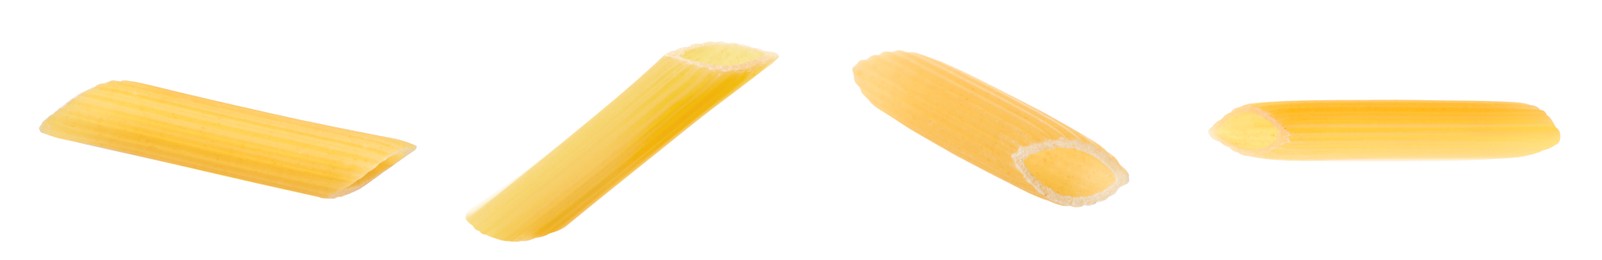 Image of Raw penne pasta isolated on white, set